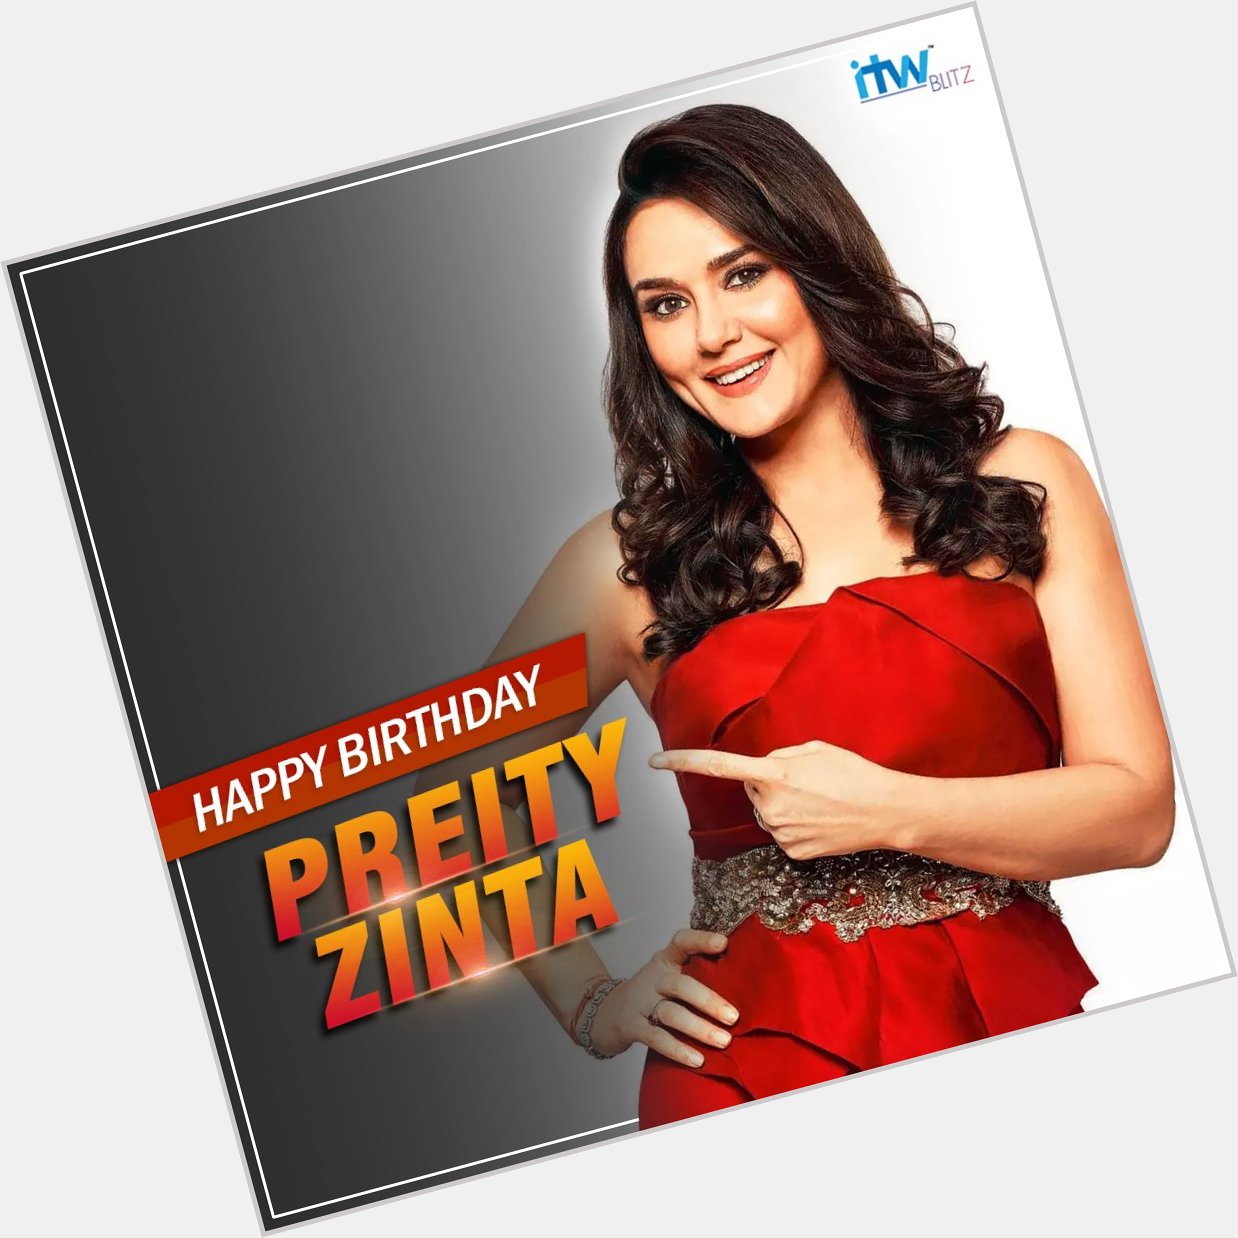 Happy Birthday Preity Zinta
.
.
.   